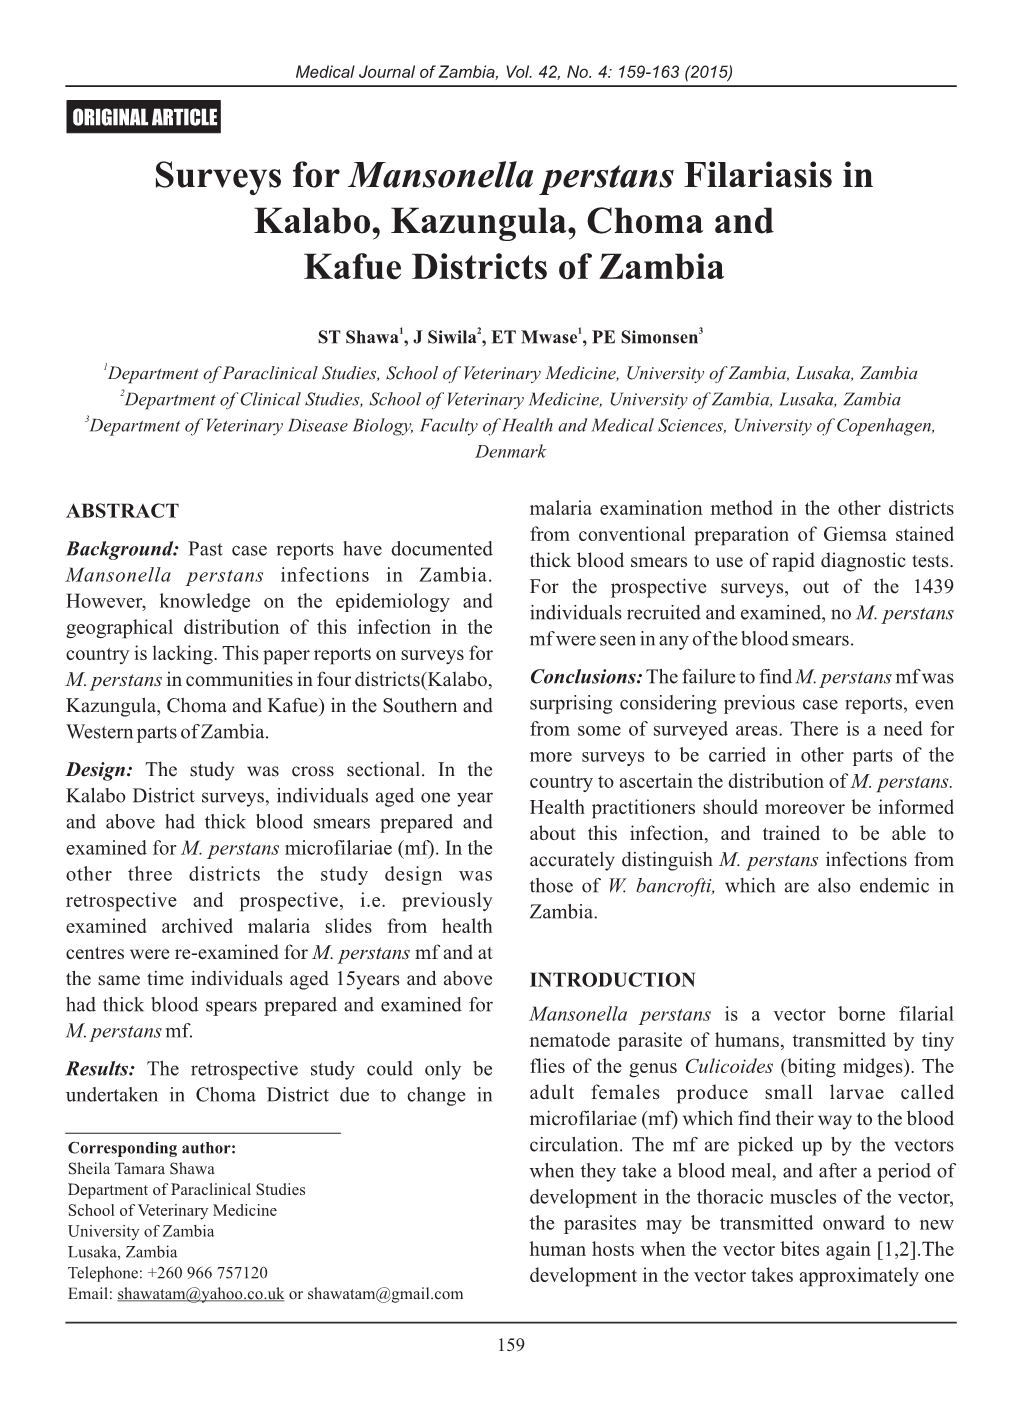 3. Surveys for Mansonella Perstansfilariasis in Kalabo